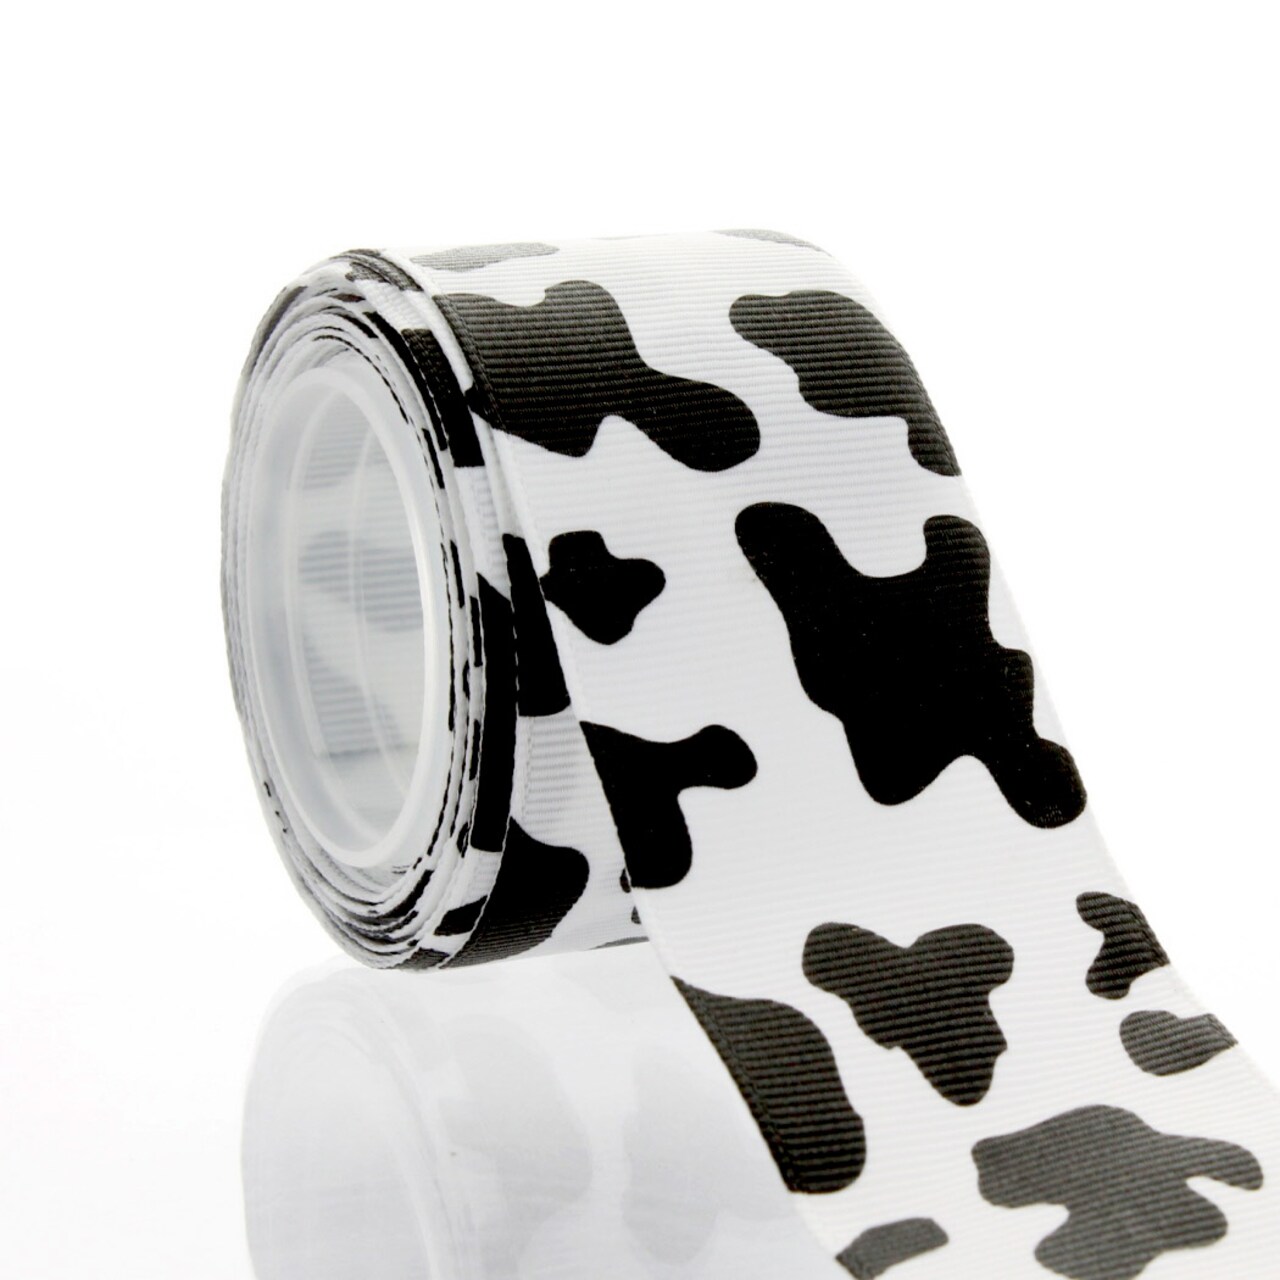 Black / White Cow Grosgrain Ribbon